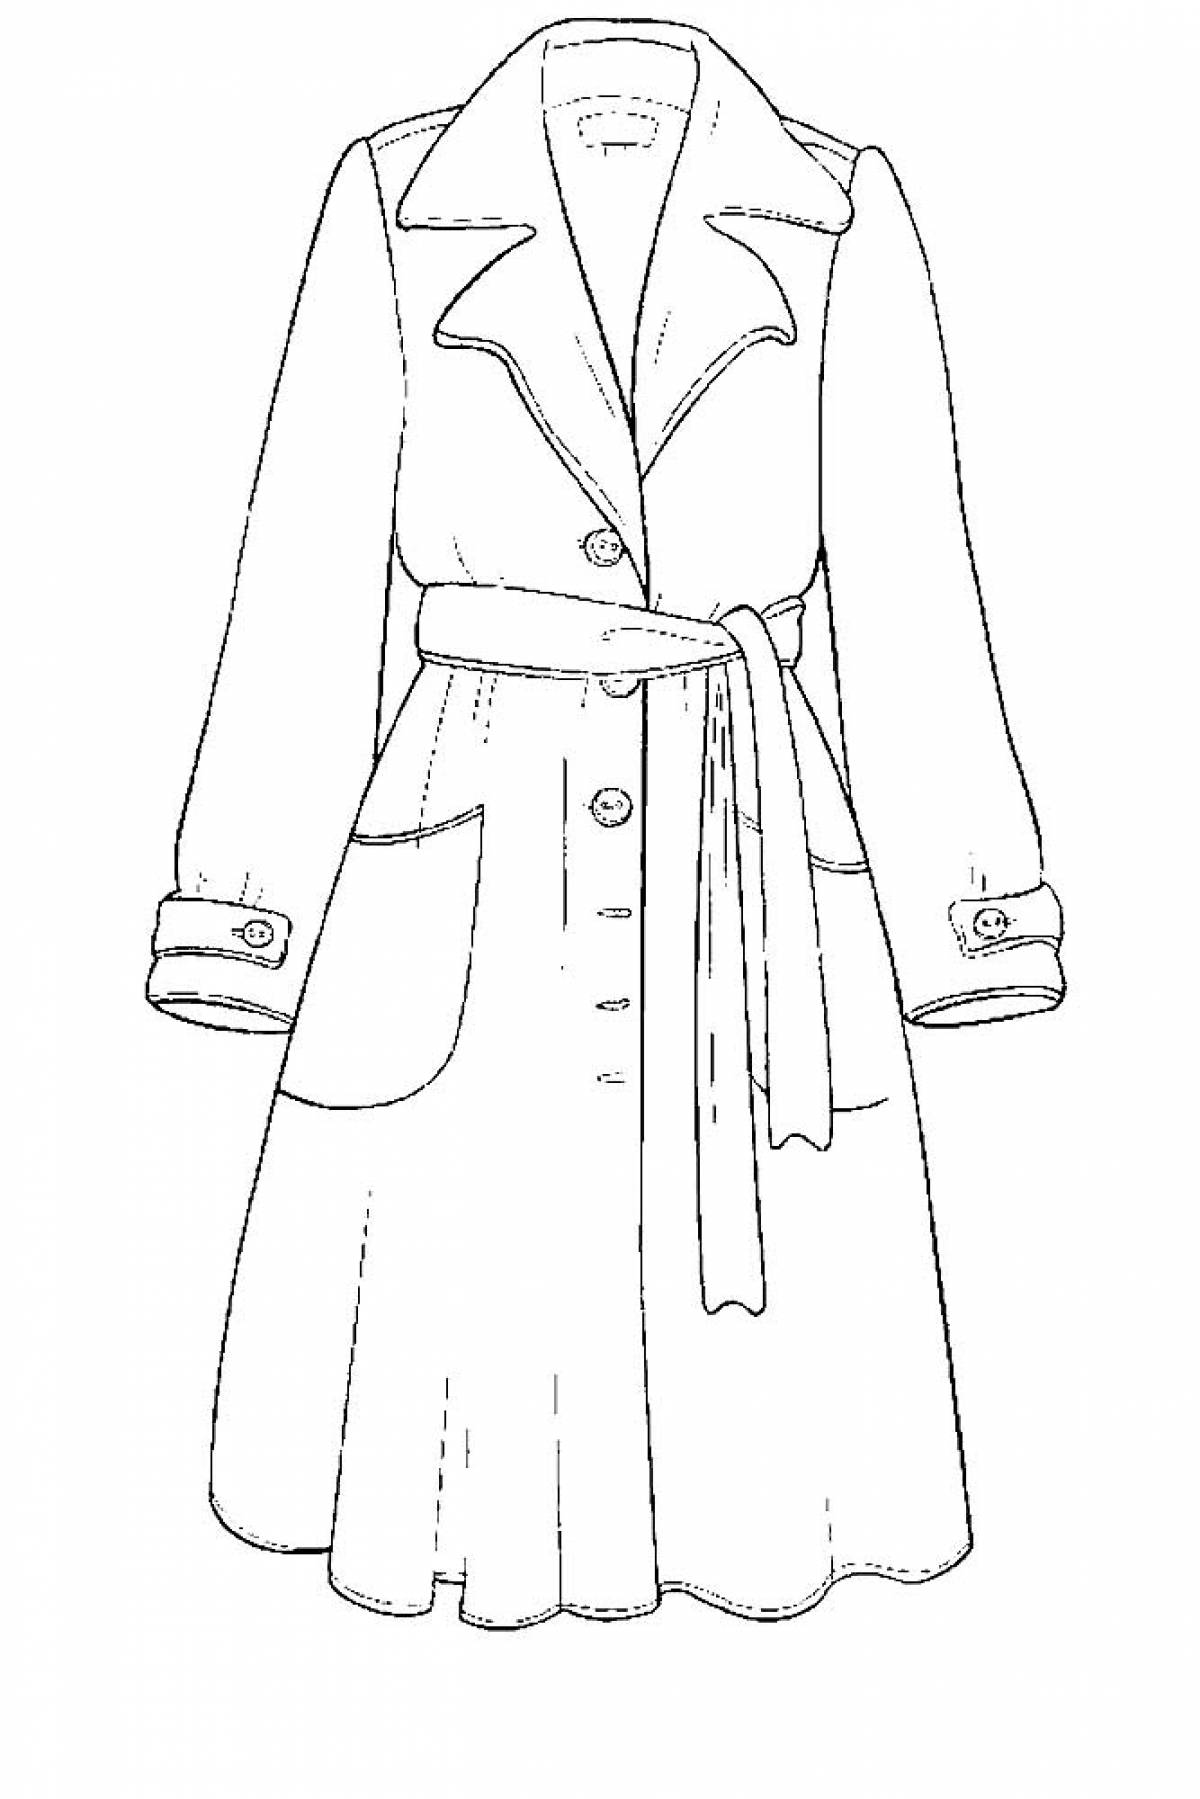 Coat with pockets